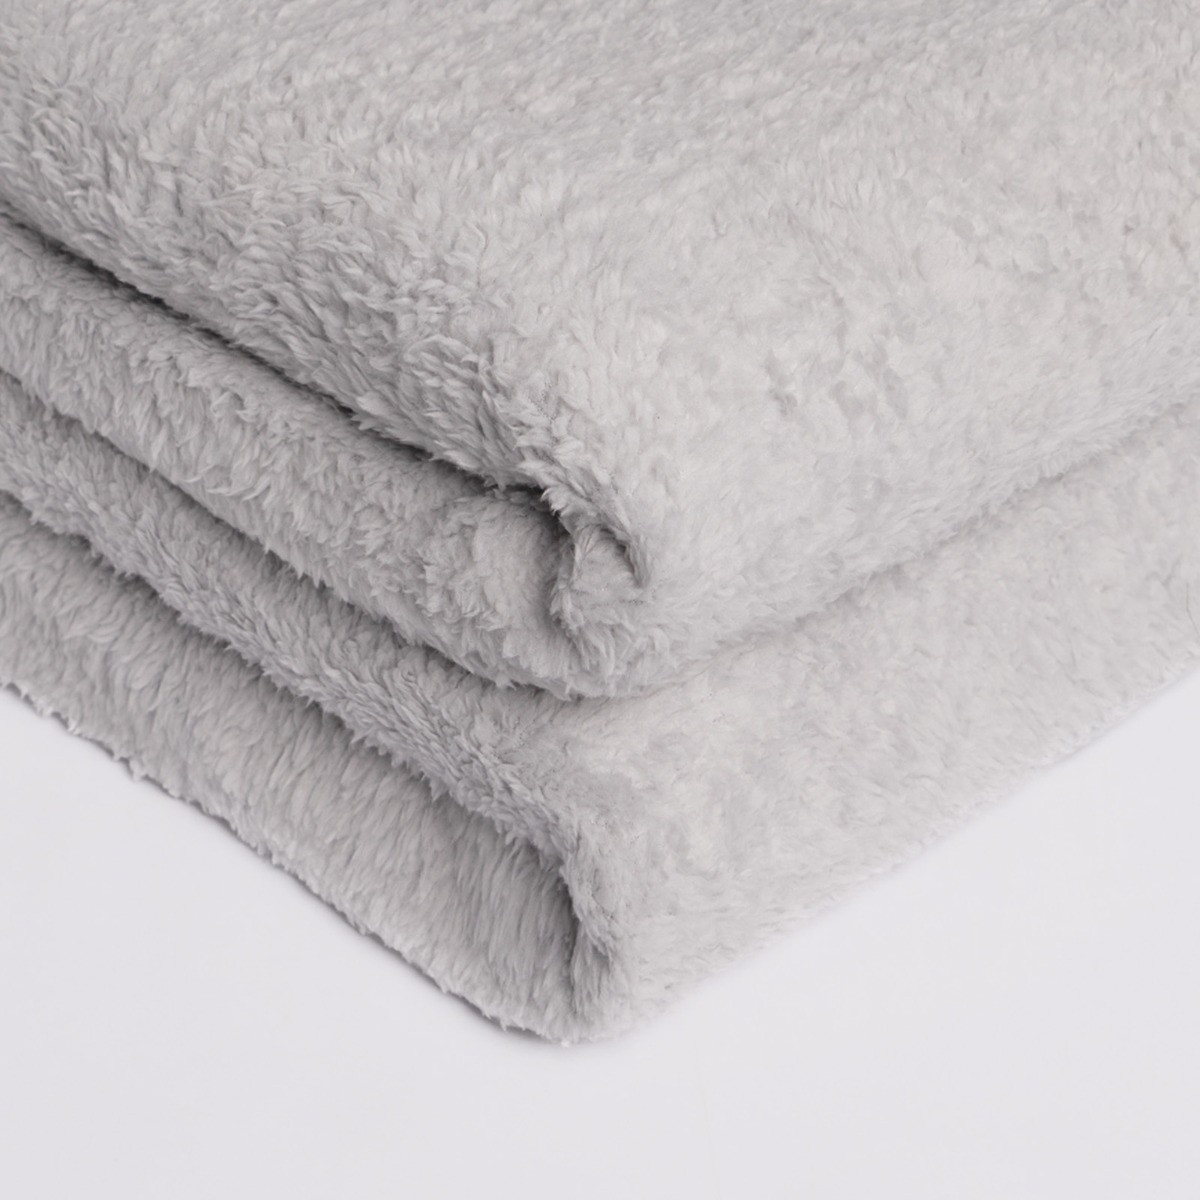 Brentfords Teddy Fleece Blanket Soft Throw Over Bed, Silver Grey - 150 x 200cm>